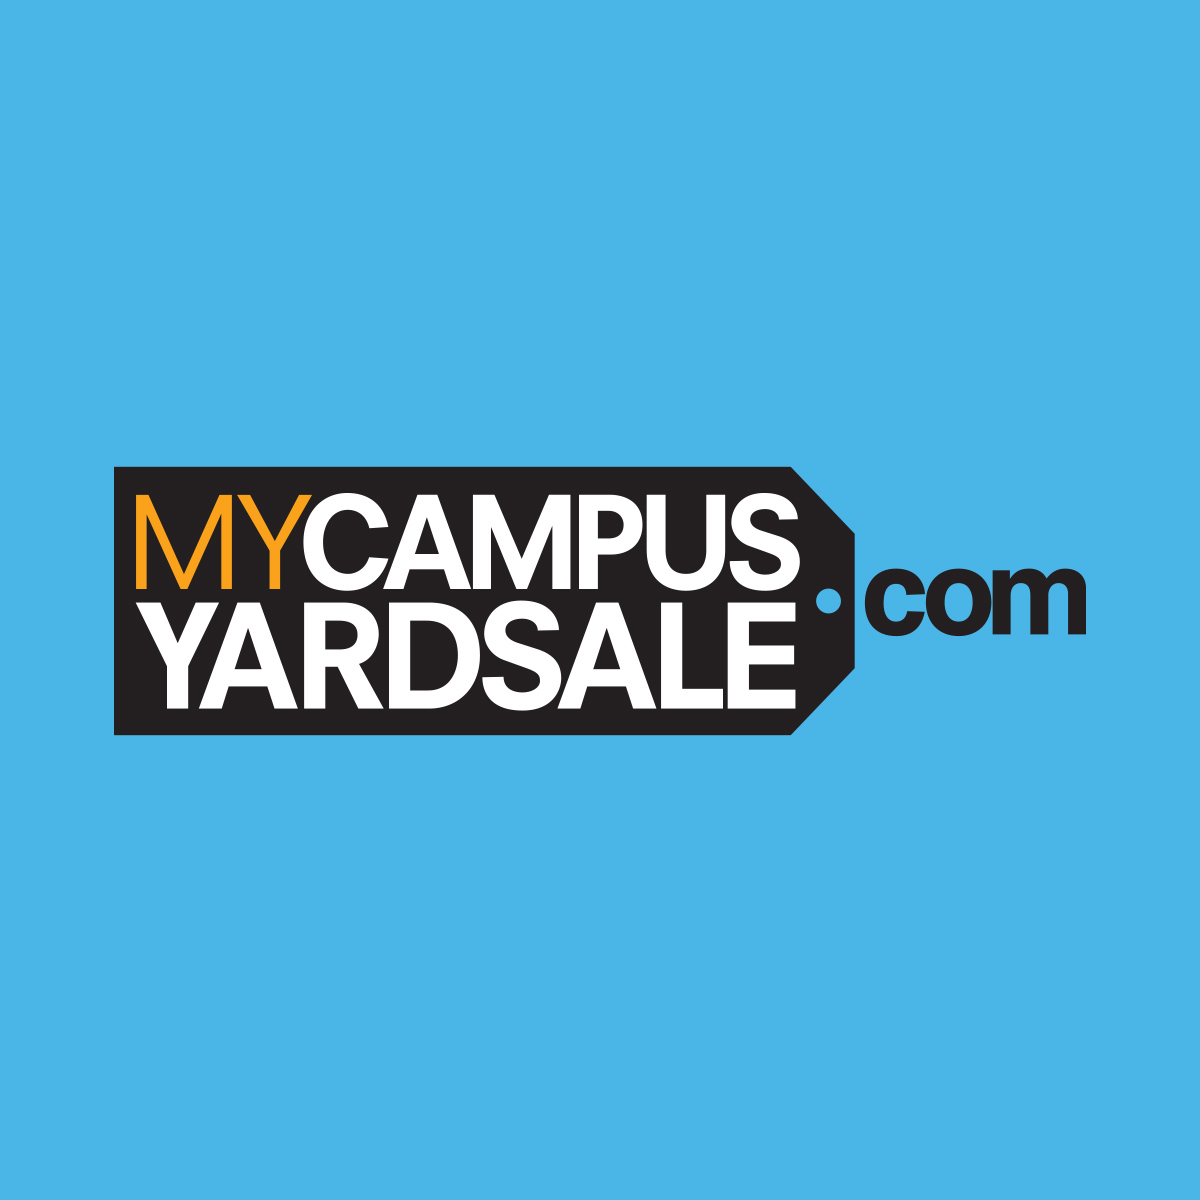 MyCampusYardSale.com Branding